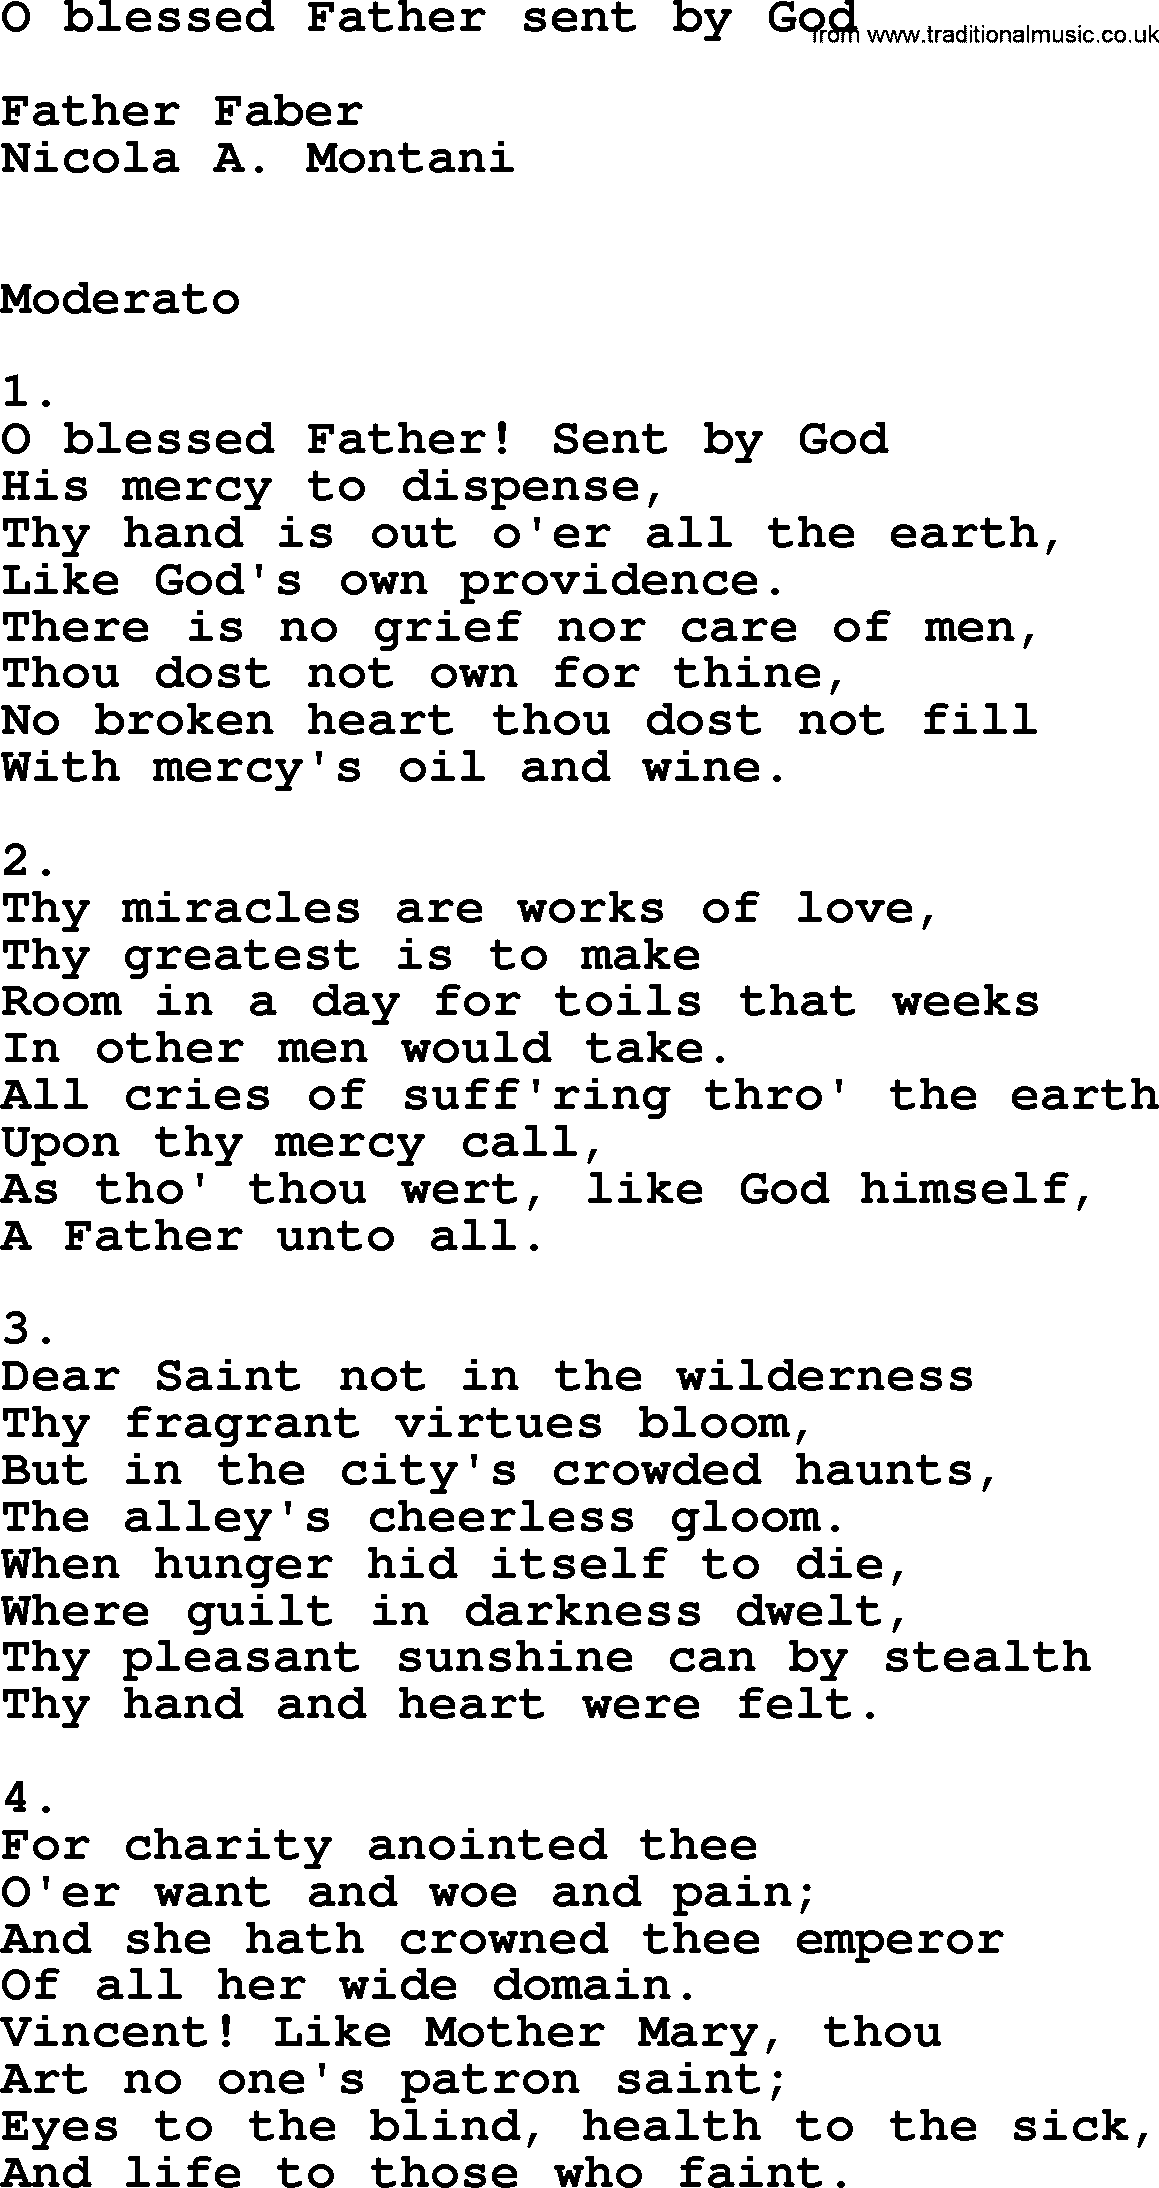 Catholic Hymn: O Blessed Father Sent By God lyrics with PDF